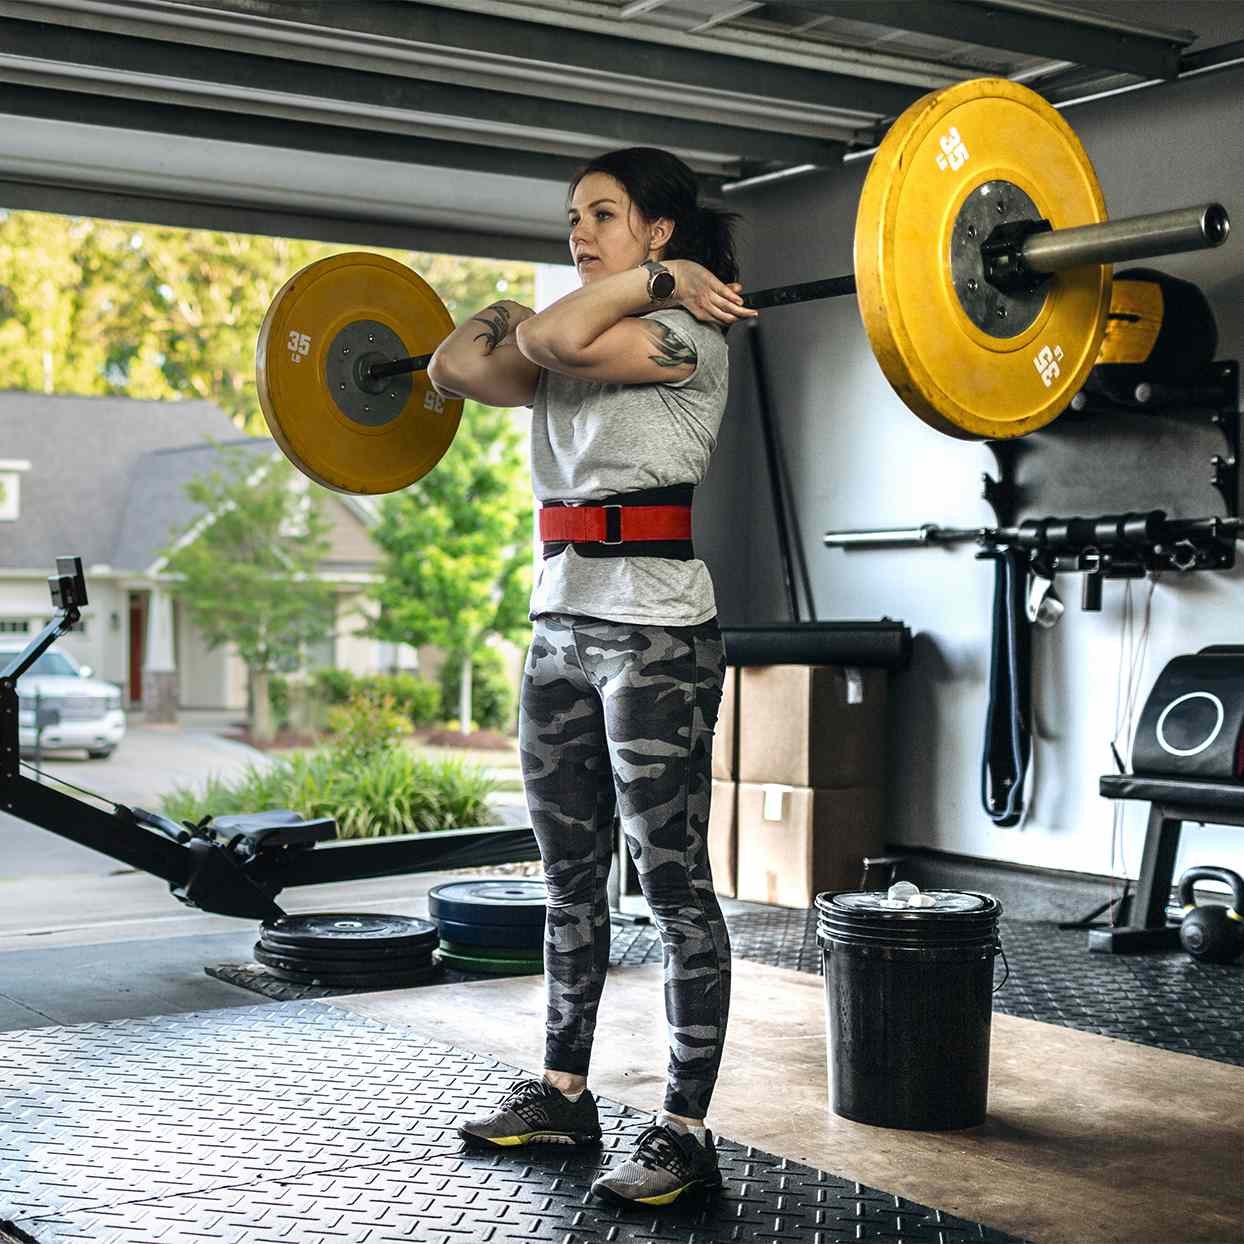 RDX Weight Power Lifting Belt Lever Pro Gym Training Powerlifting Strength Belts